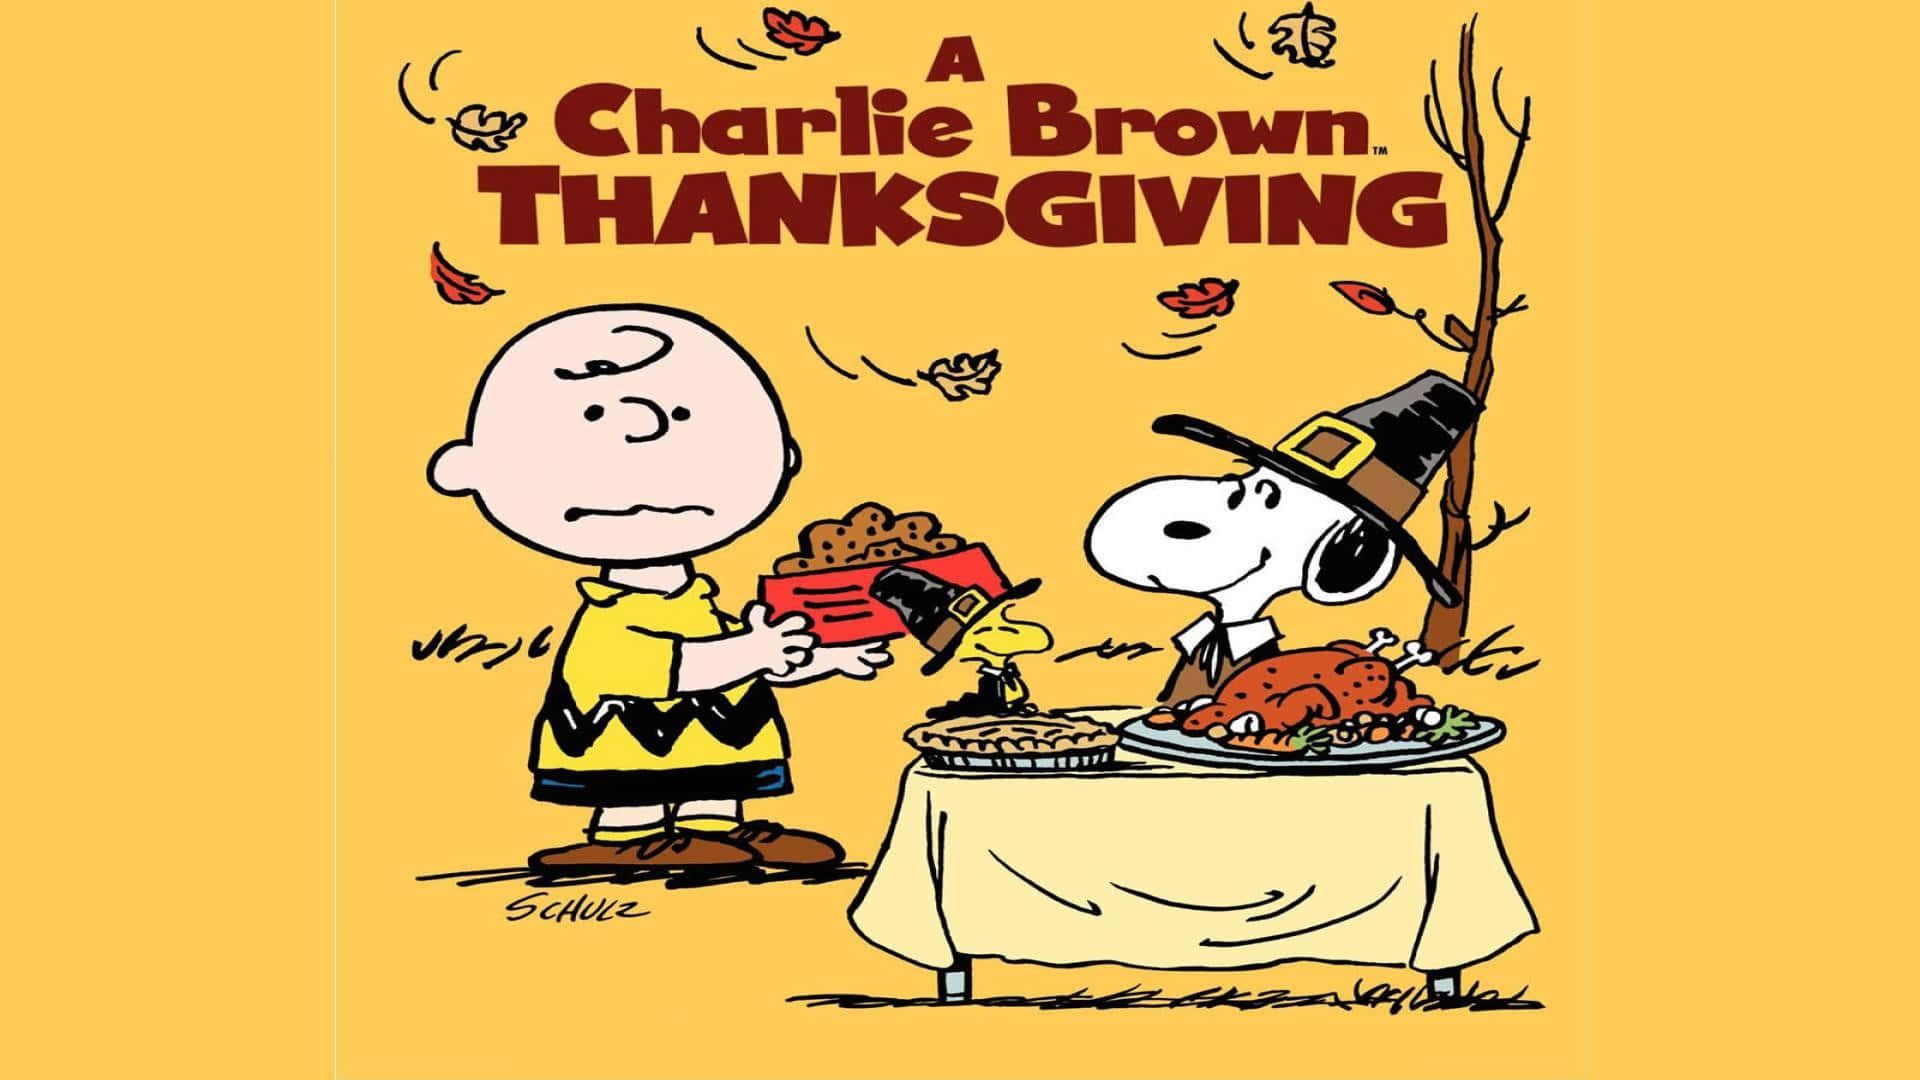 A Thankful Snoopy Celebrates Thanksgiving